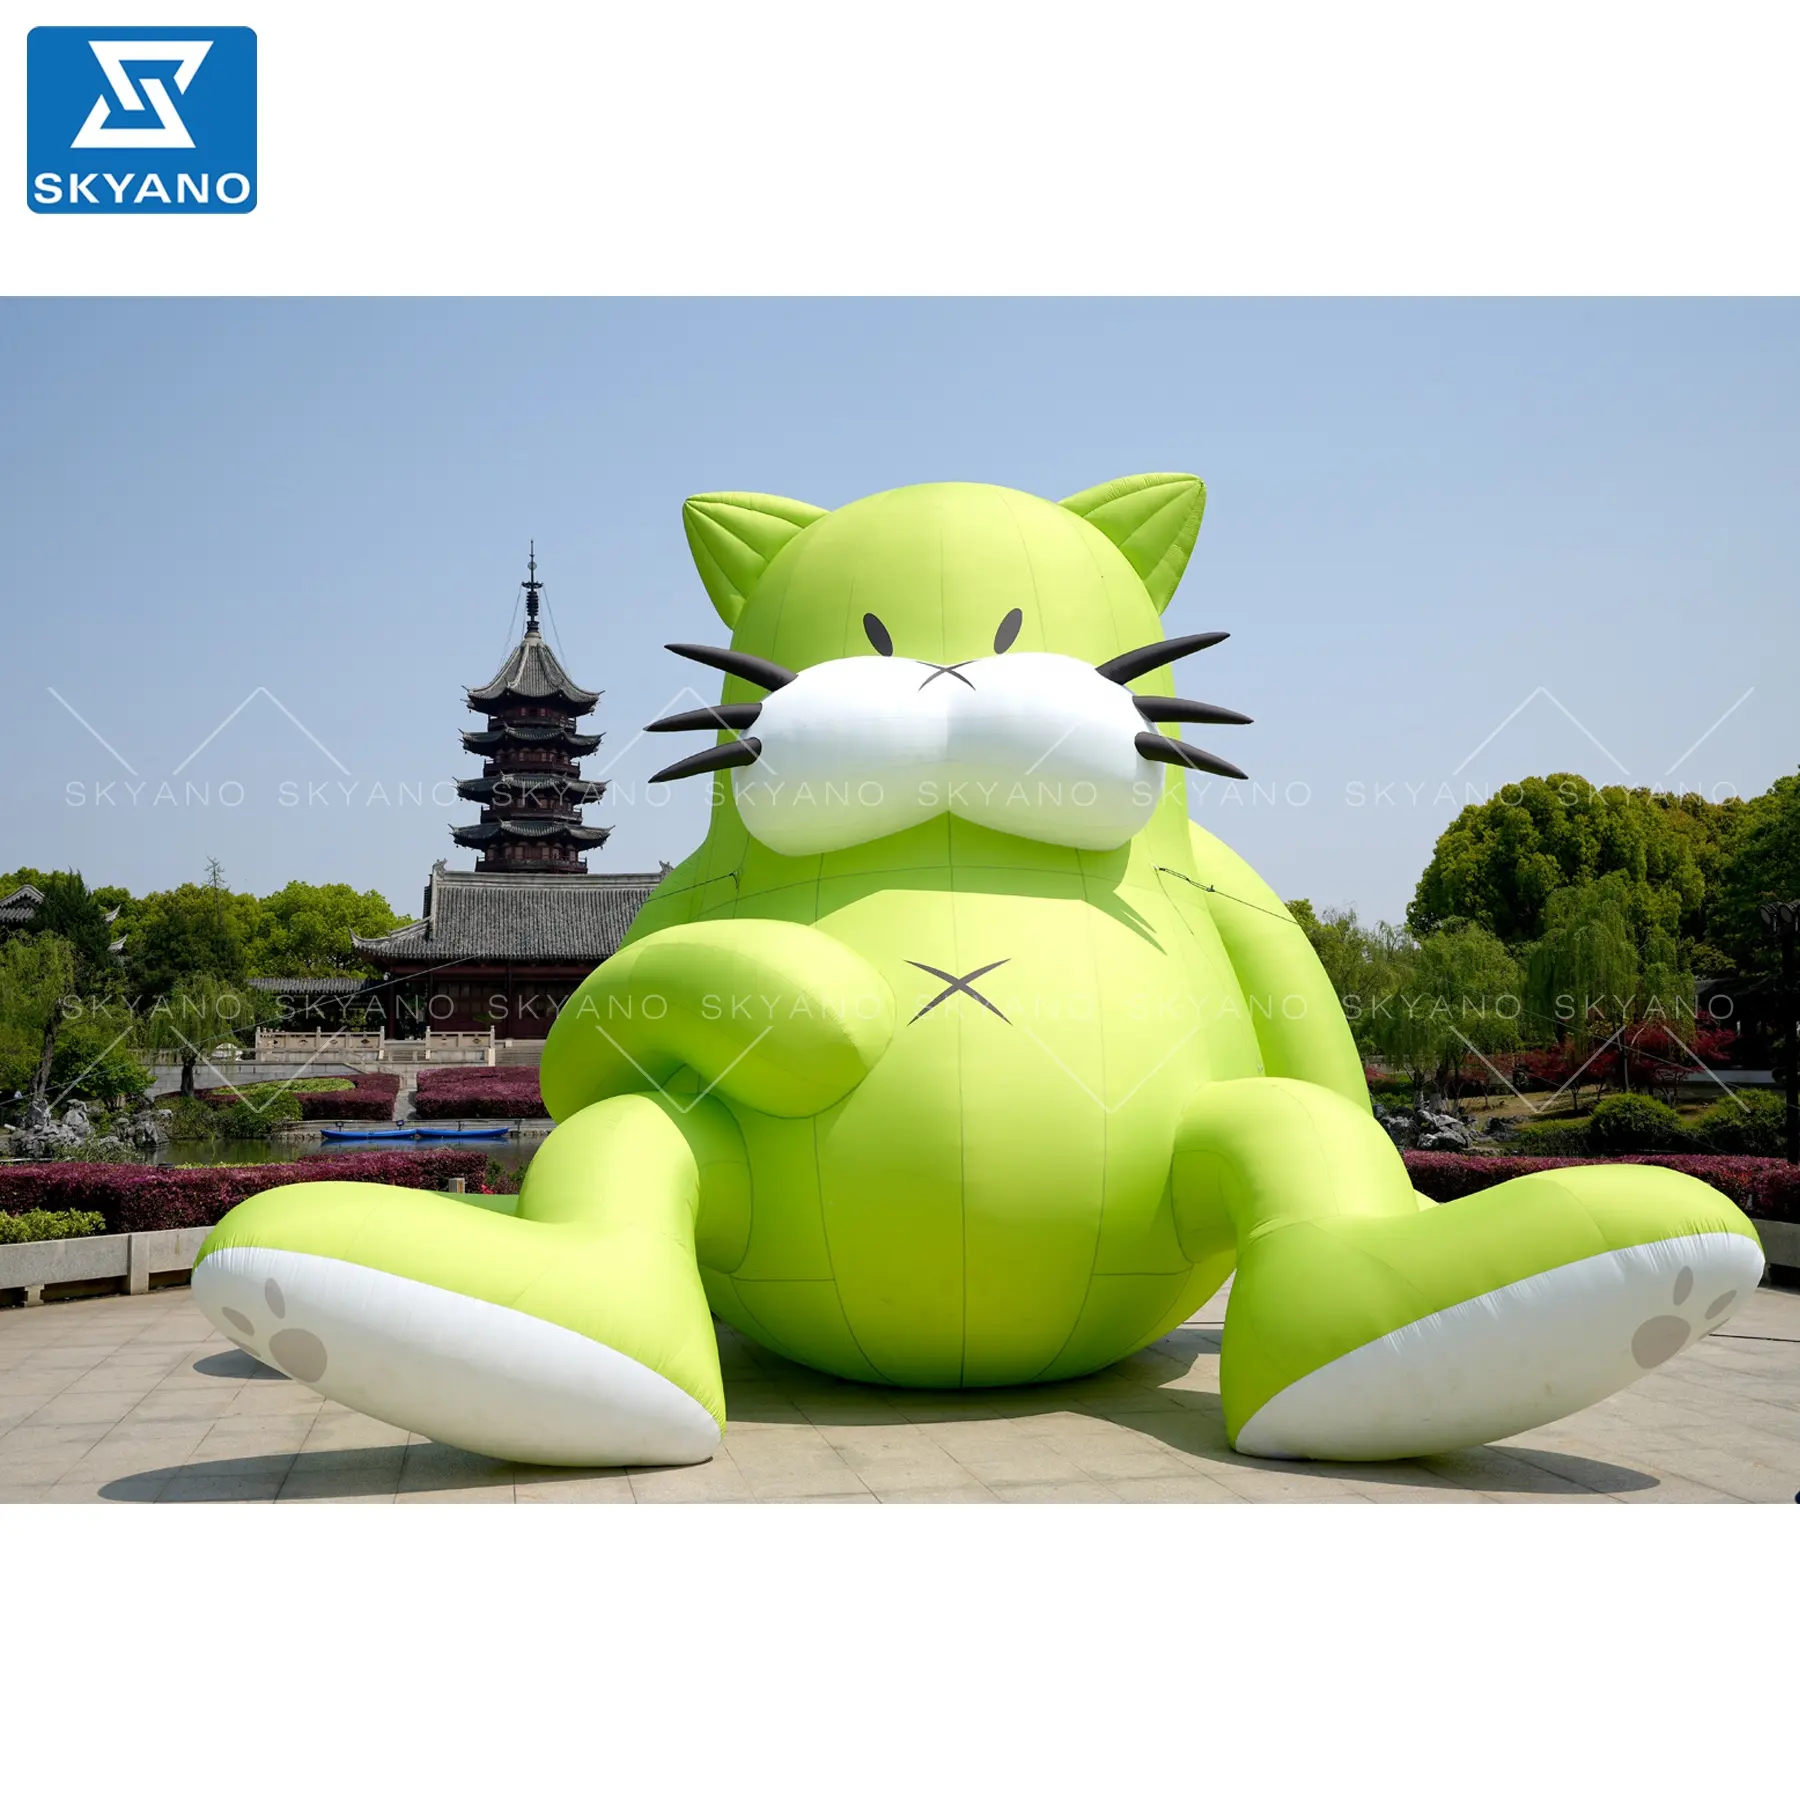 Modelo de arte inflable gigante personalizado, Gato loco